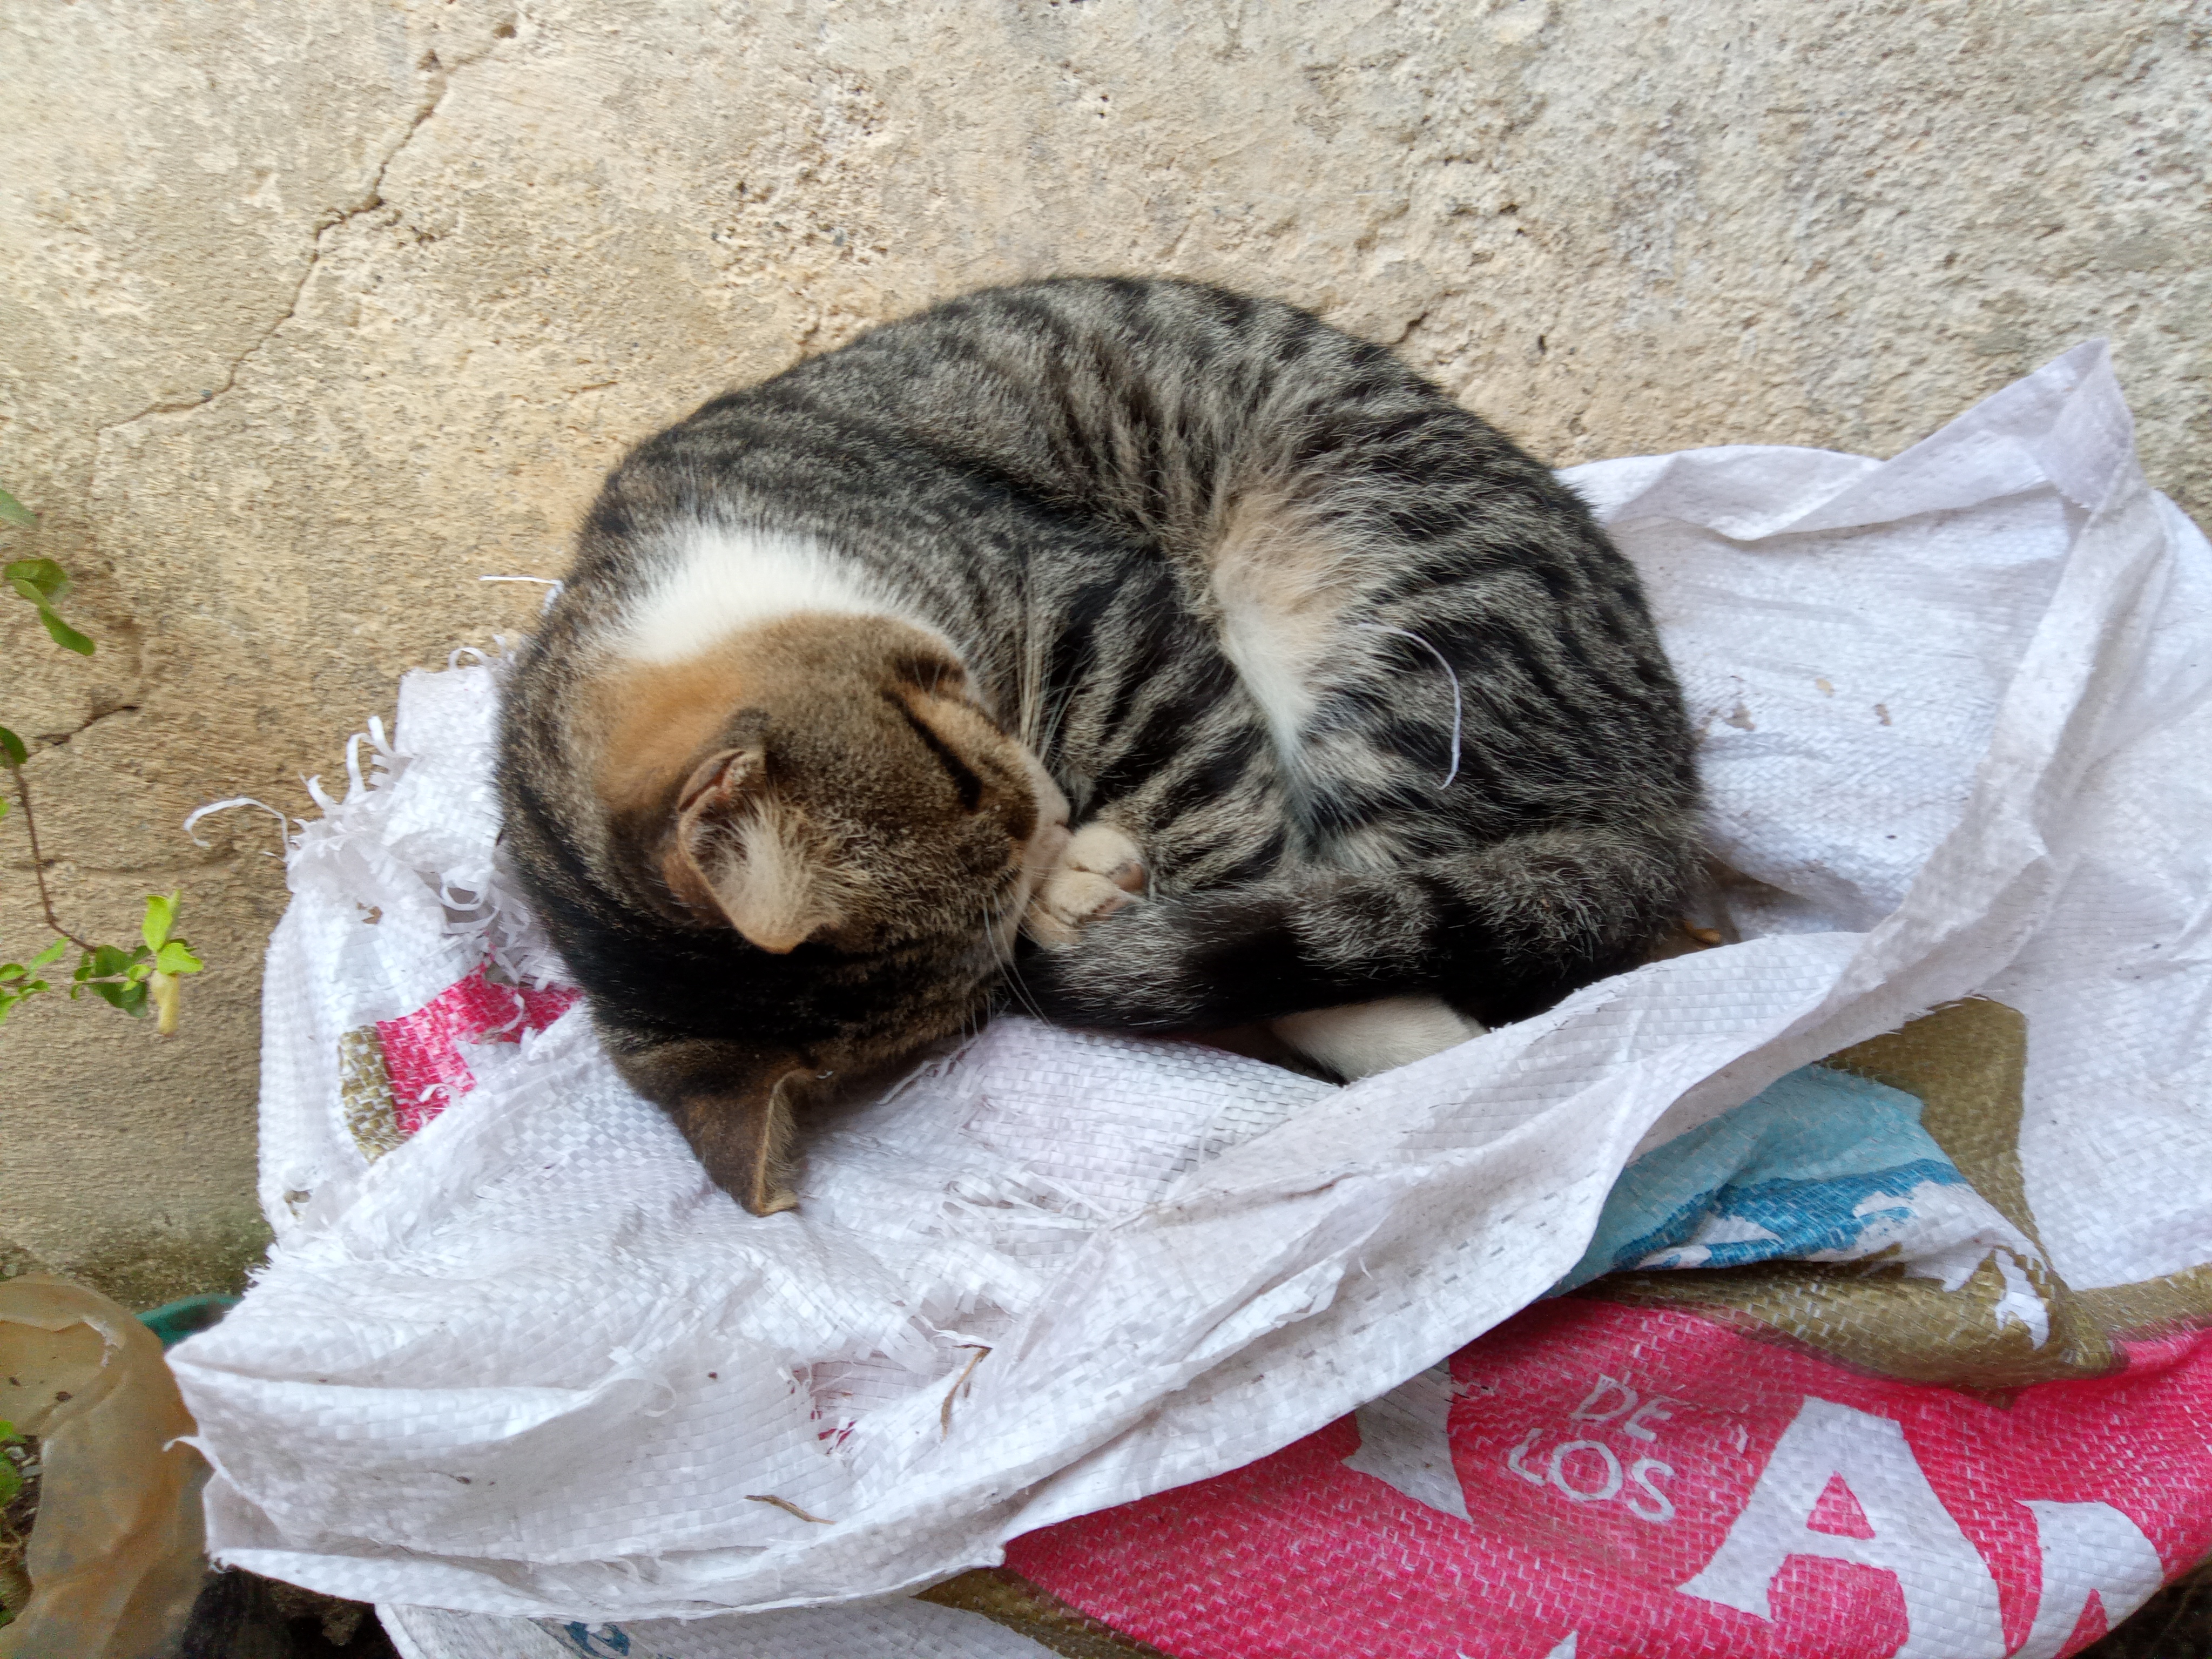 mydailypost-esp-eng-el-gato-durmiente-a-sleeping-cat-blurt